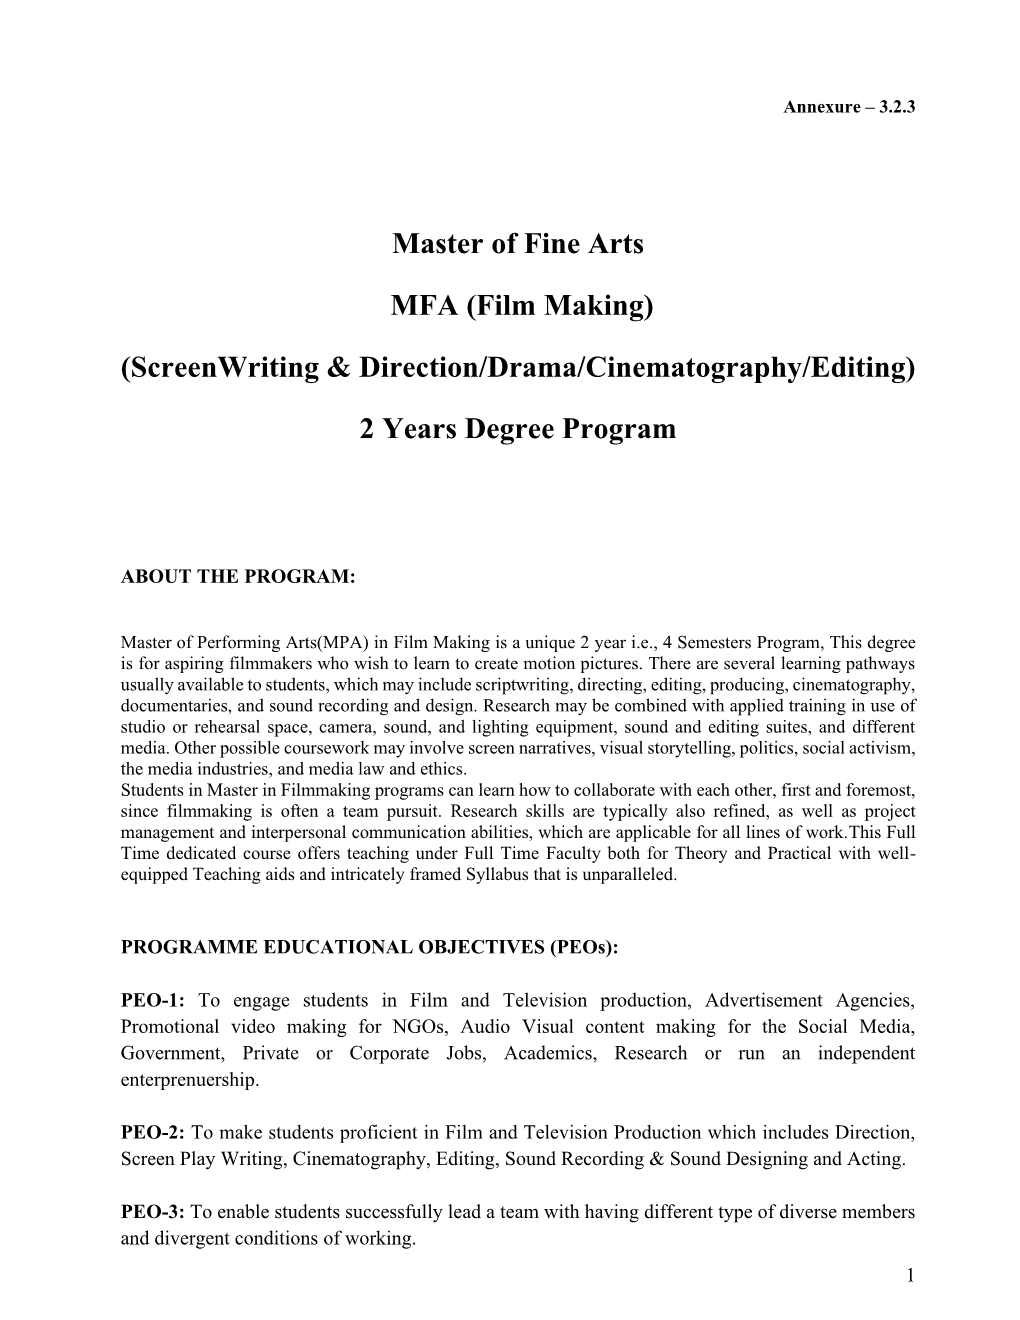 Master of Fine Arts MFA (Film Making) (Screenwriting & Direction/Drama